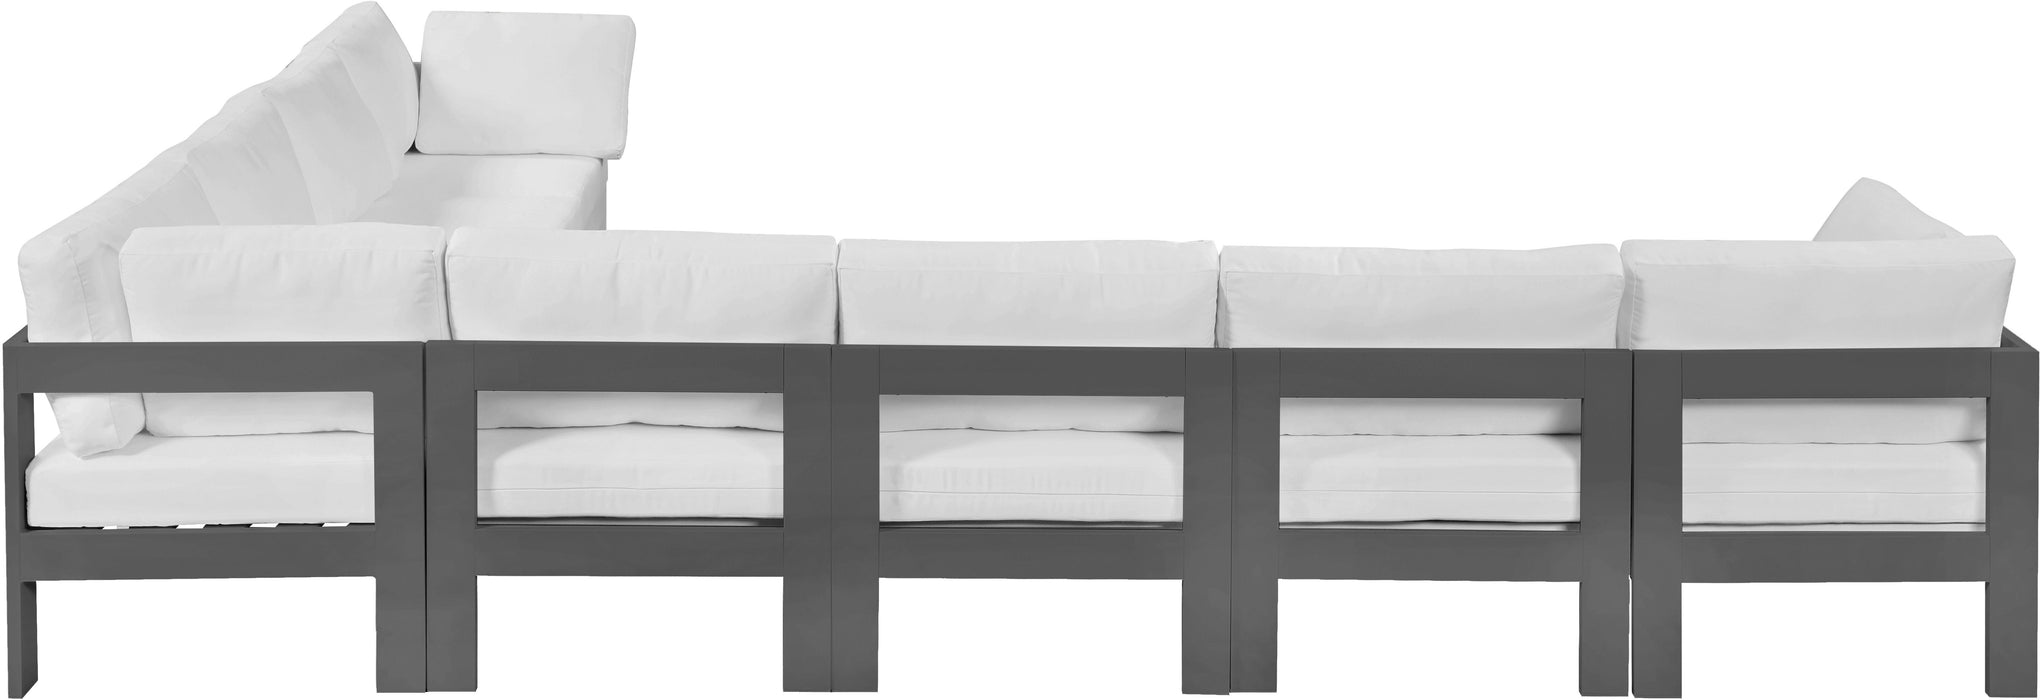 Nizuc - Outdoor Patio Modular Sectional 8 Piece - White - Fabric - Modern & Contemporary